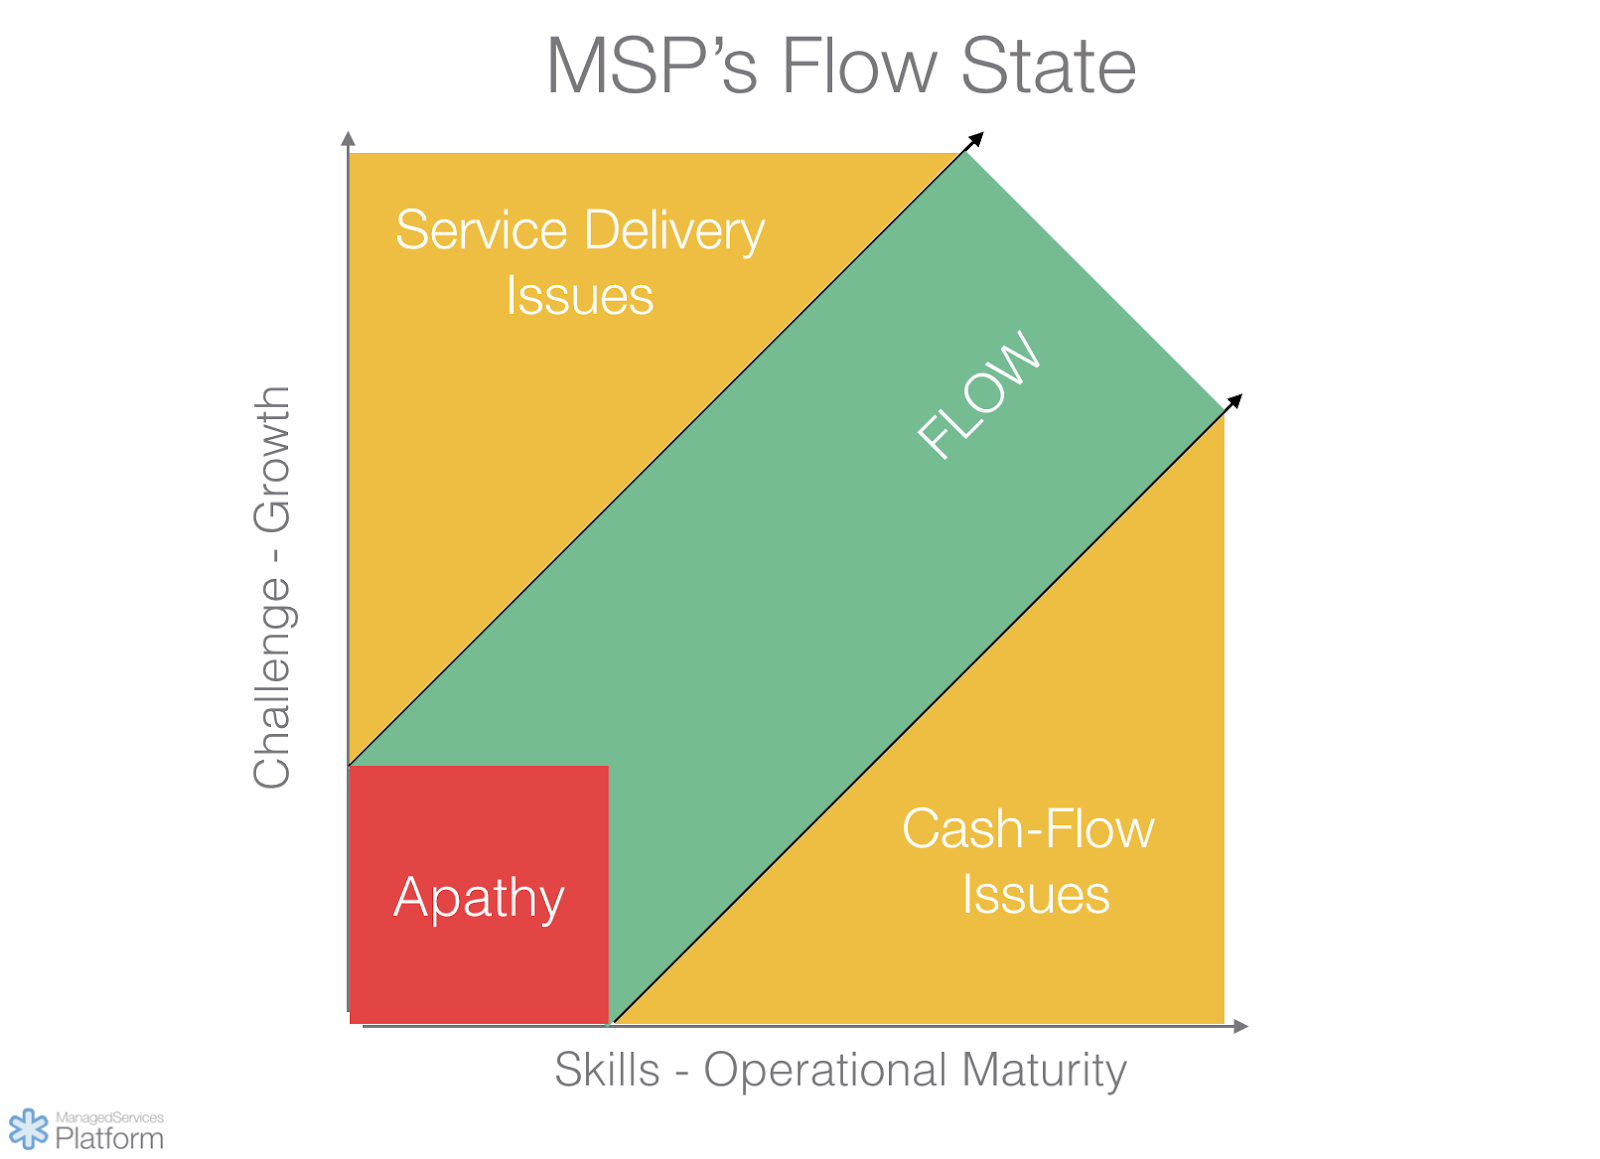 MSP's flow state